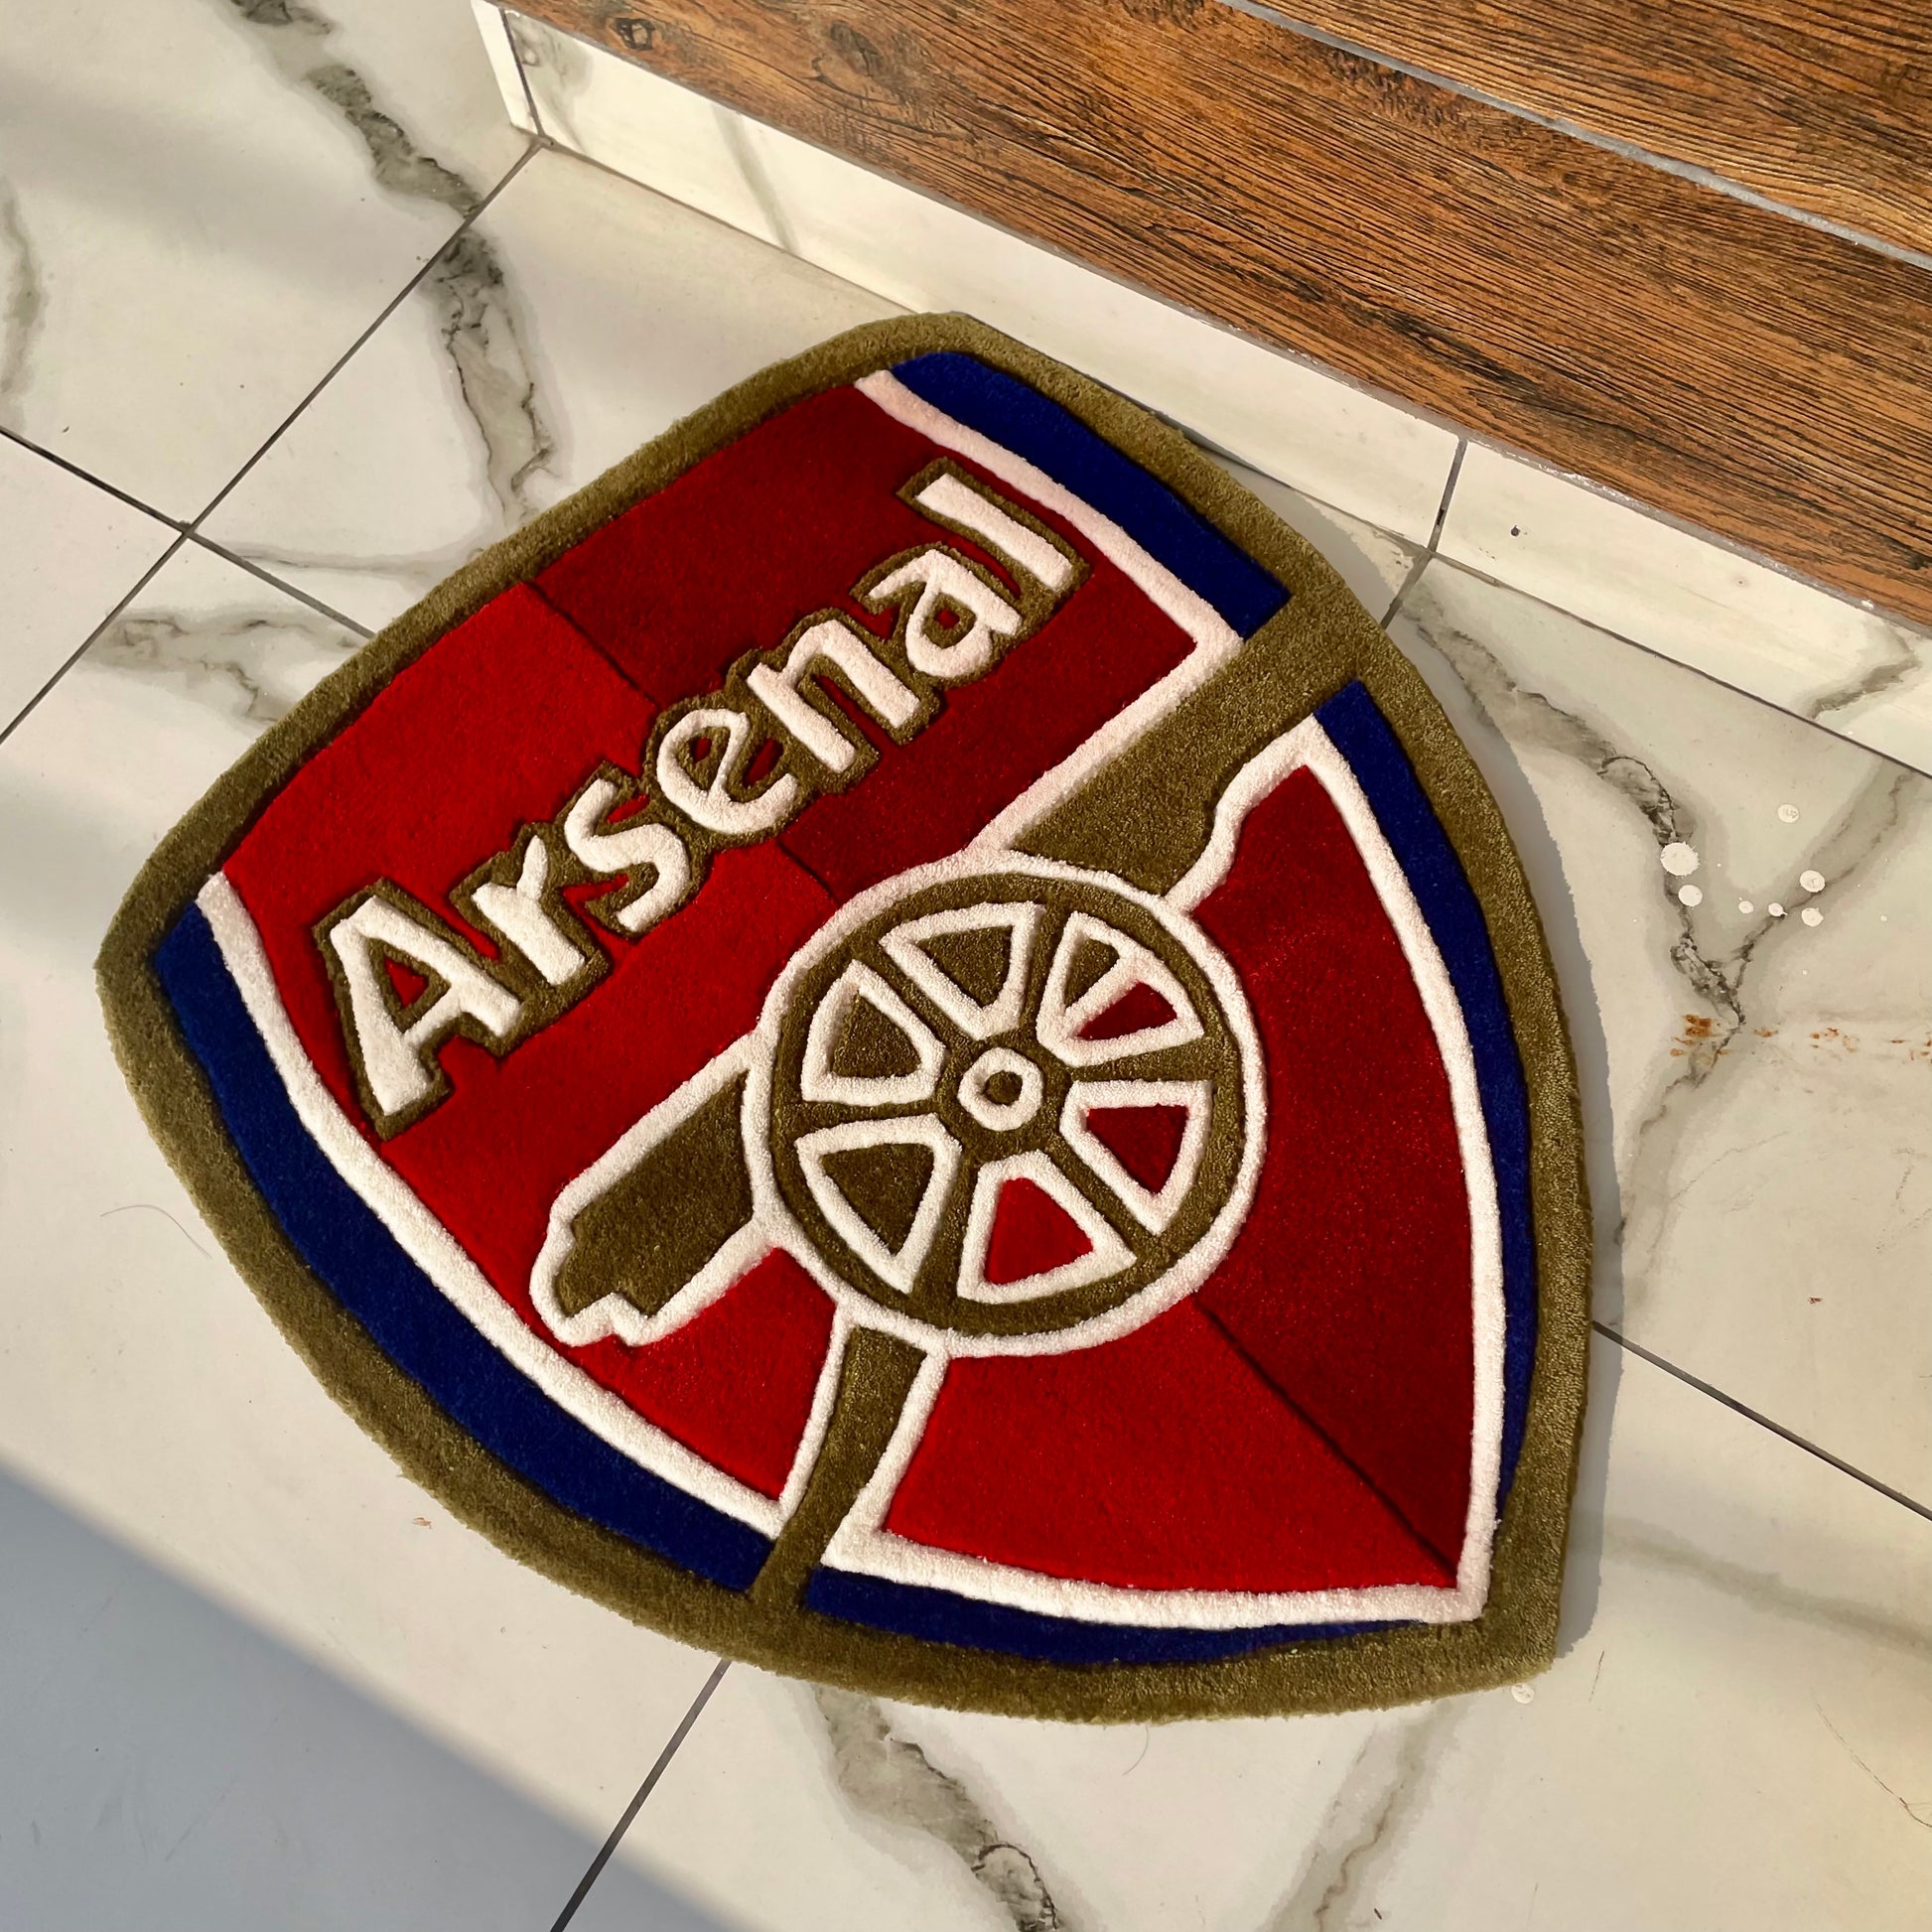 Arsenal fc football logo rug on floor